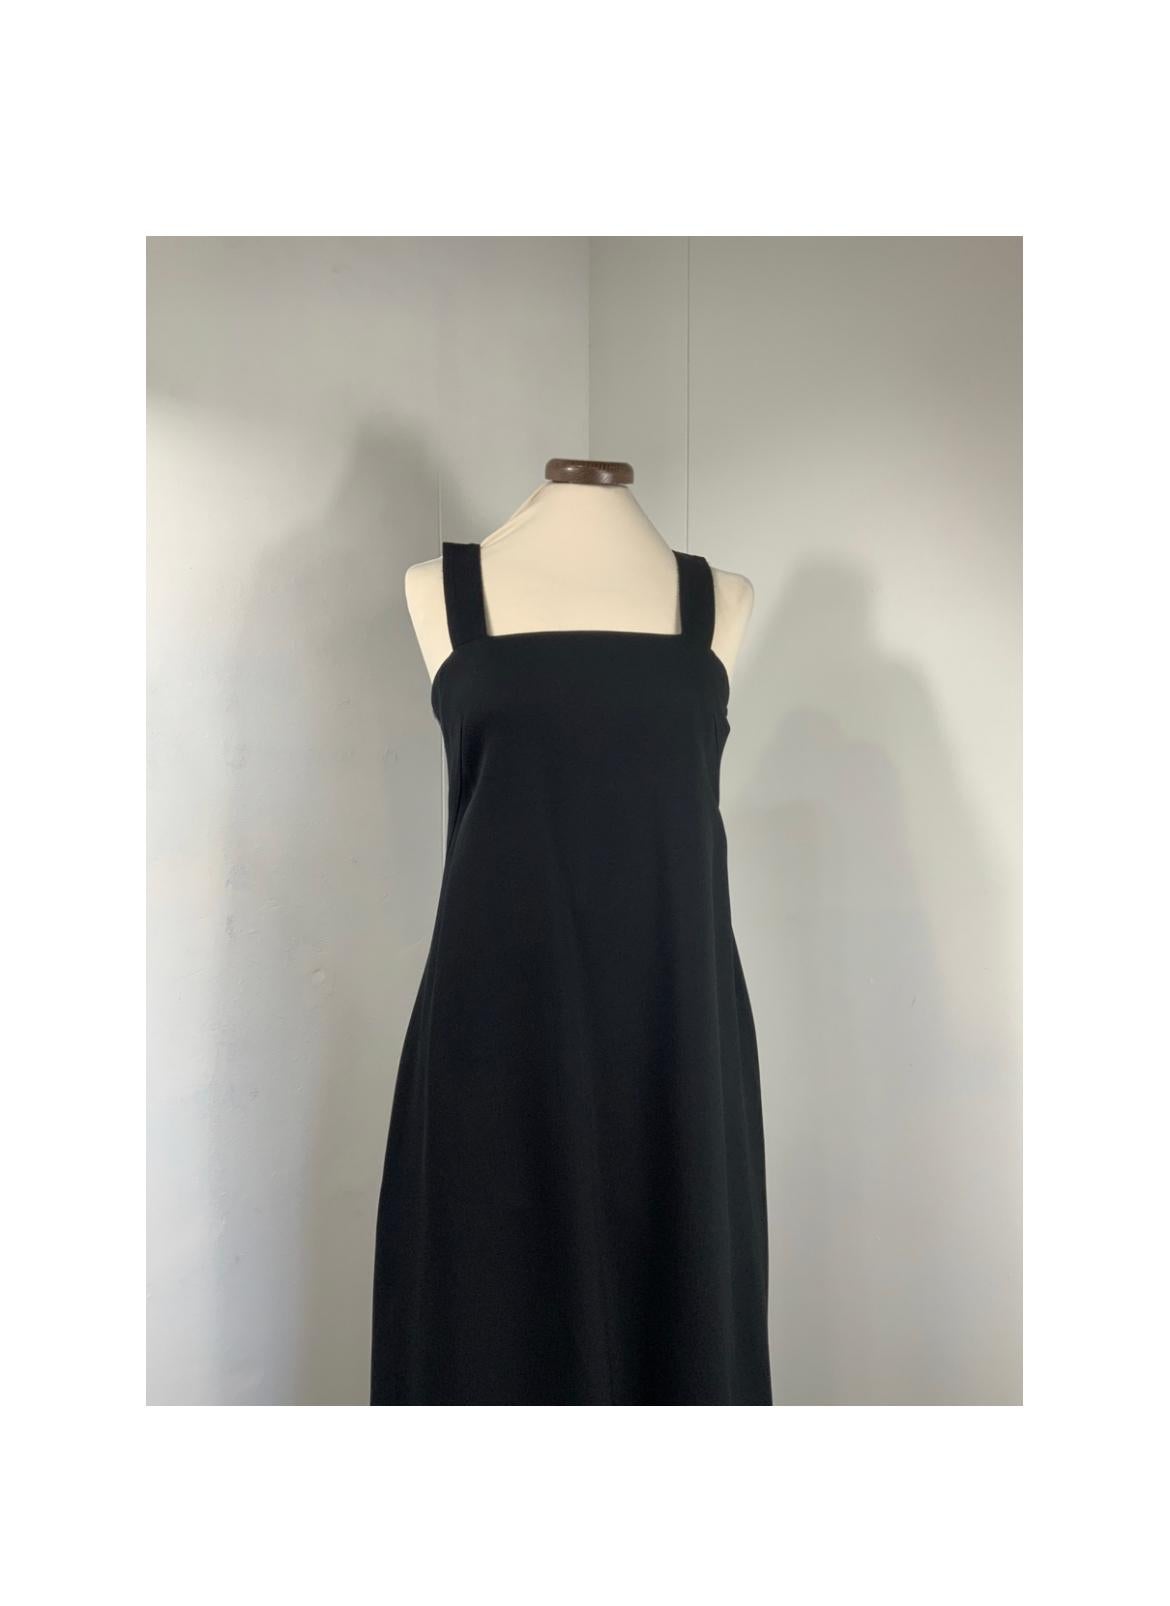 Black Maison Martin Margiela black dress. For Sale